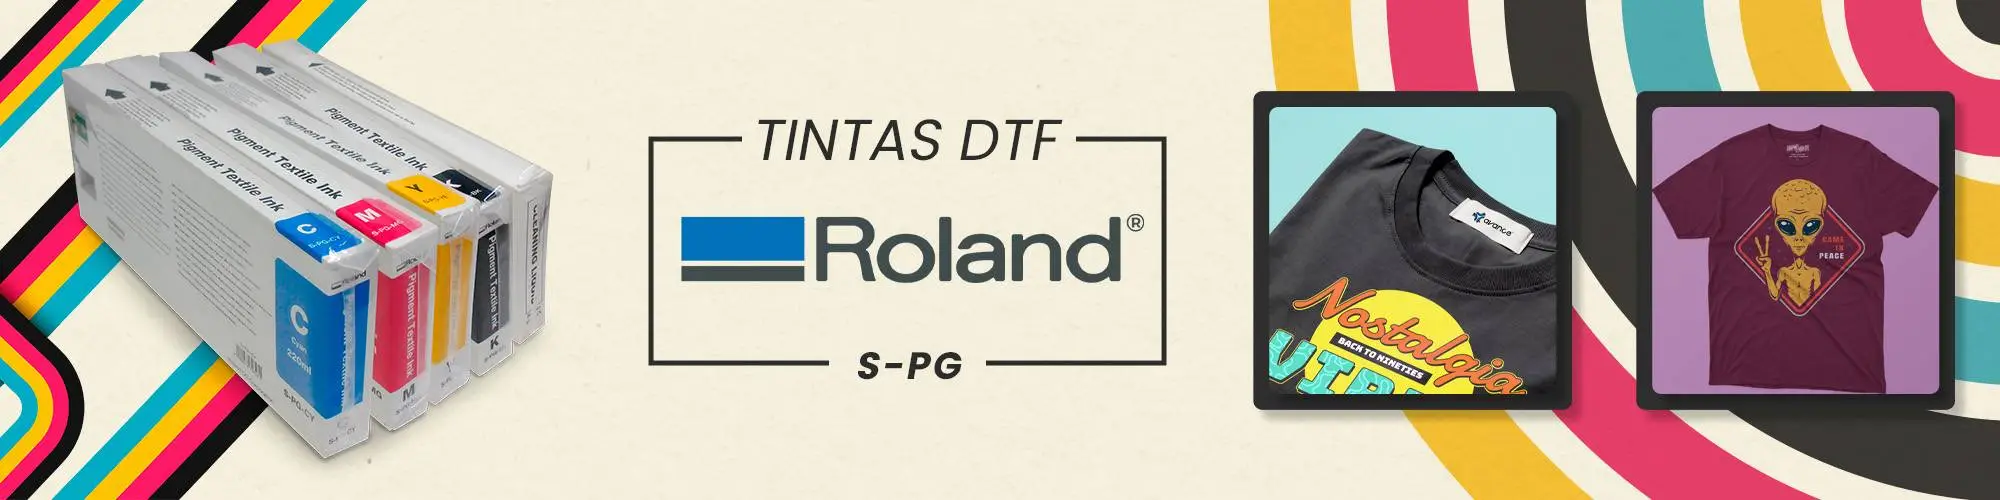 tintas Roland BN-20 